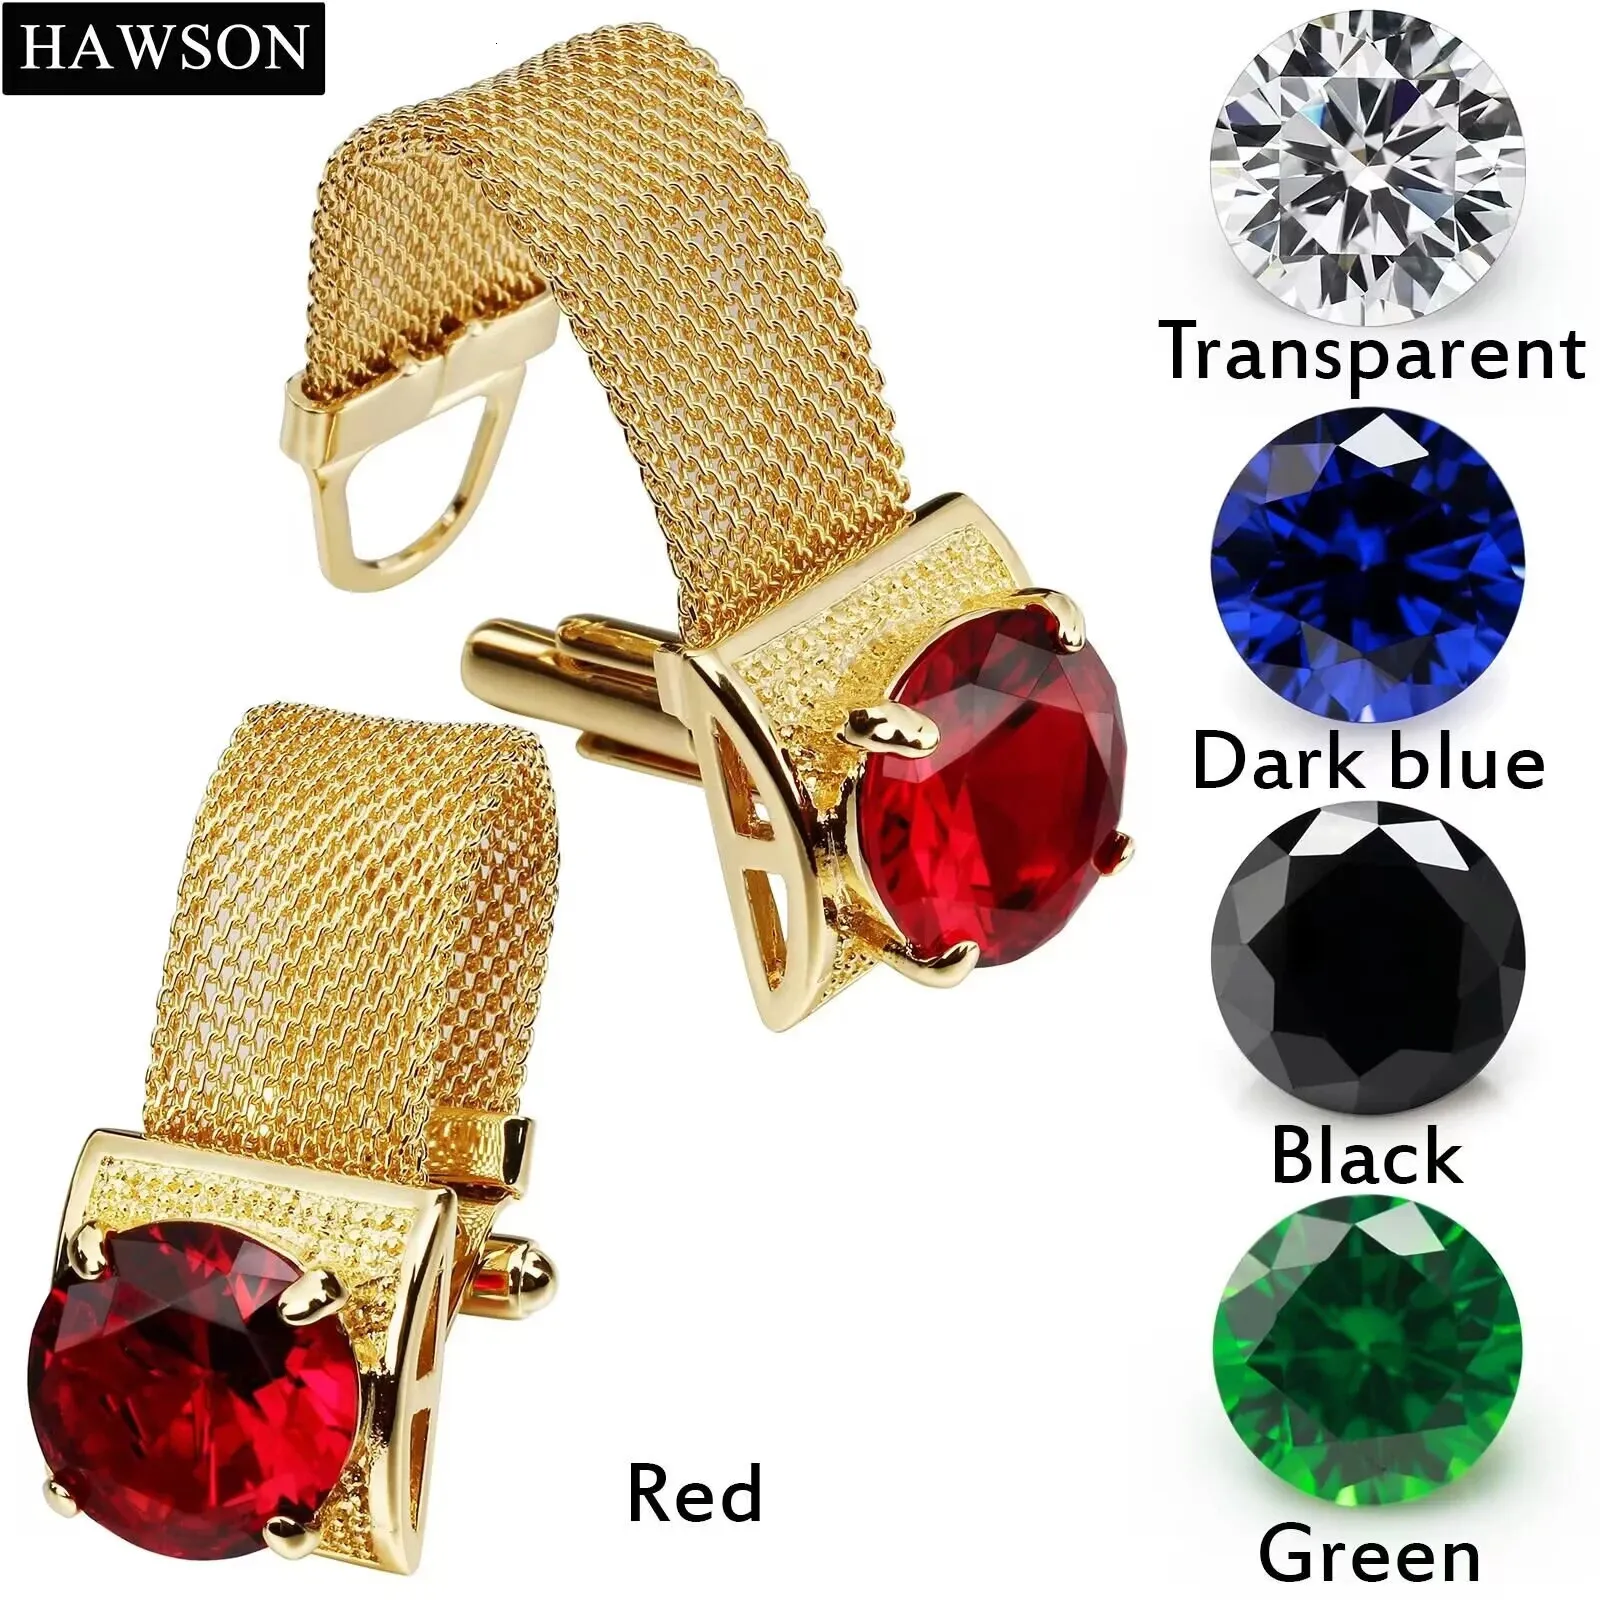 HAWSON Luxury Shiny Crystal Cufflinks for Mens with Chain mens shirt wedding business accessoriesMens cufflinks Button 17mm 240124